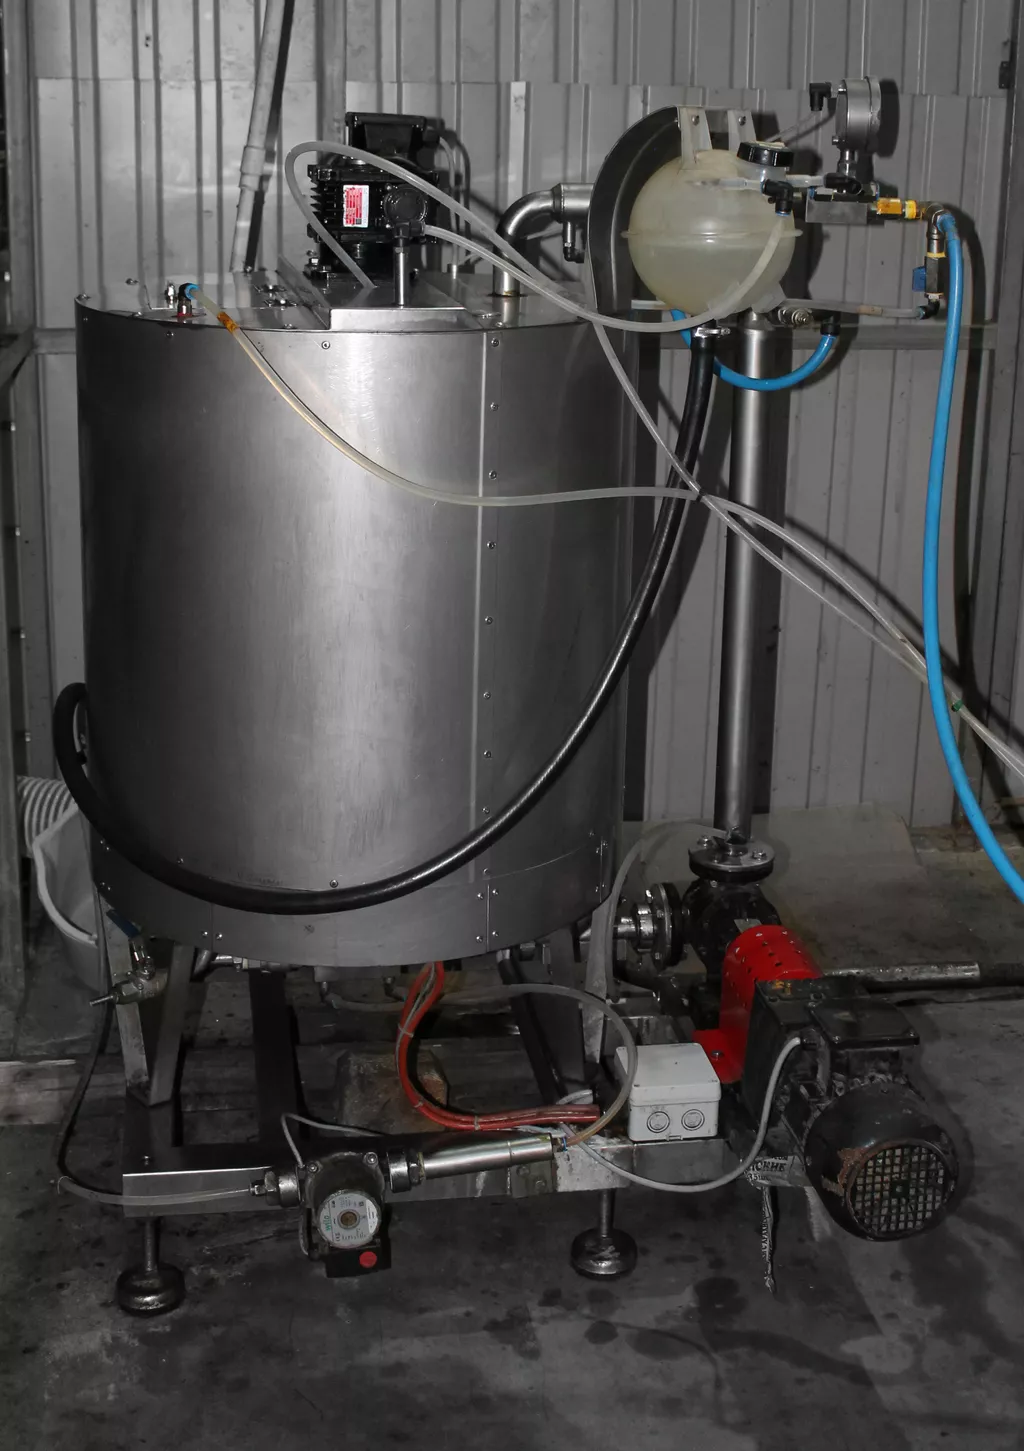 машина нанесения масла и специй cs 1000 в Пензе